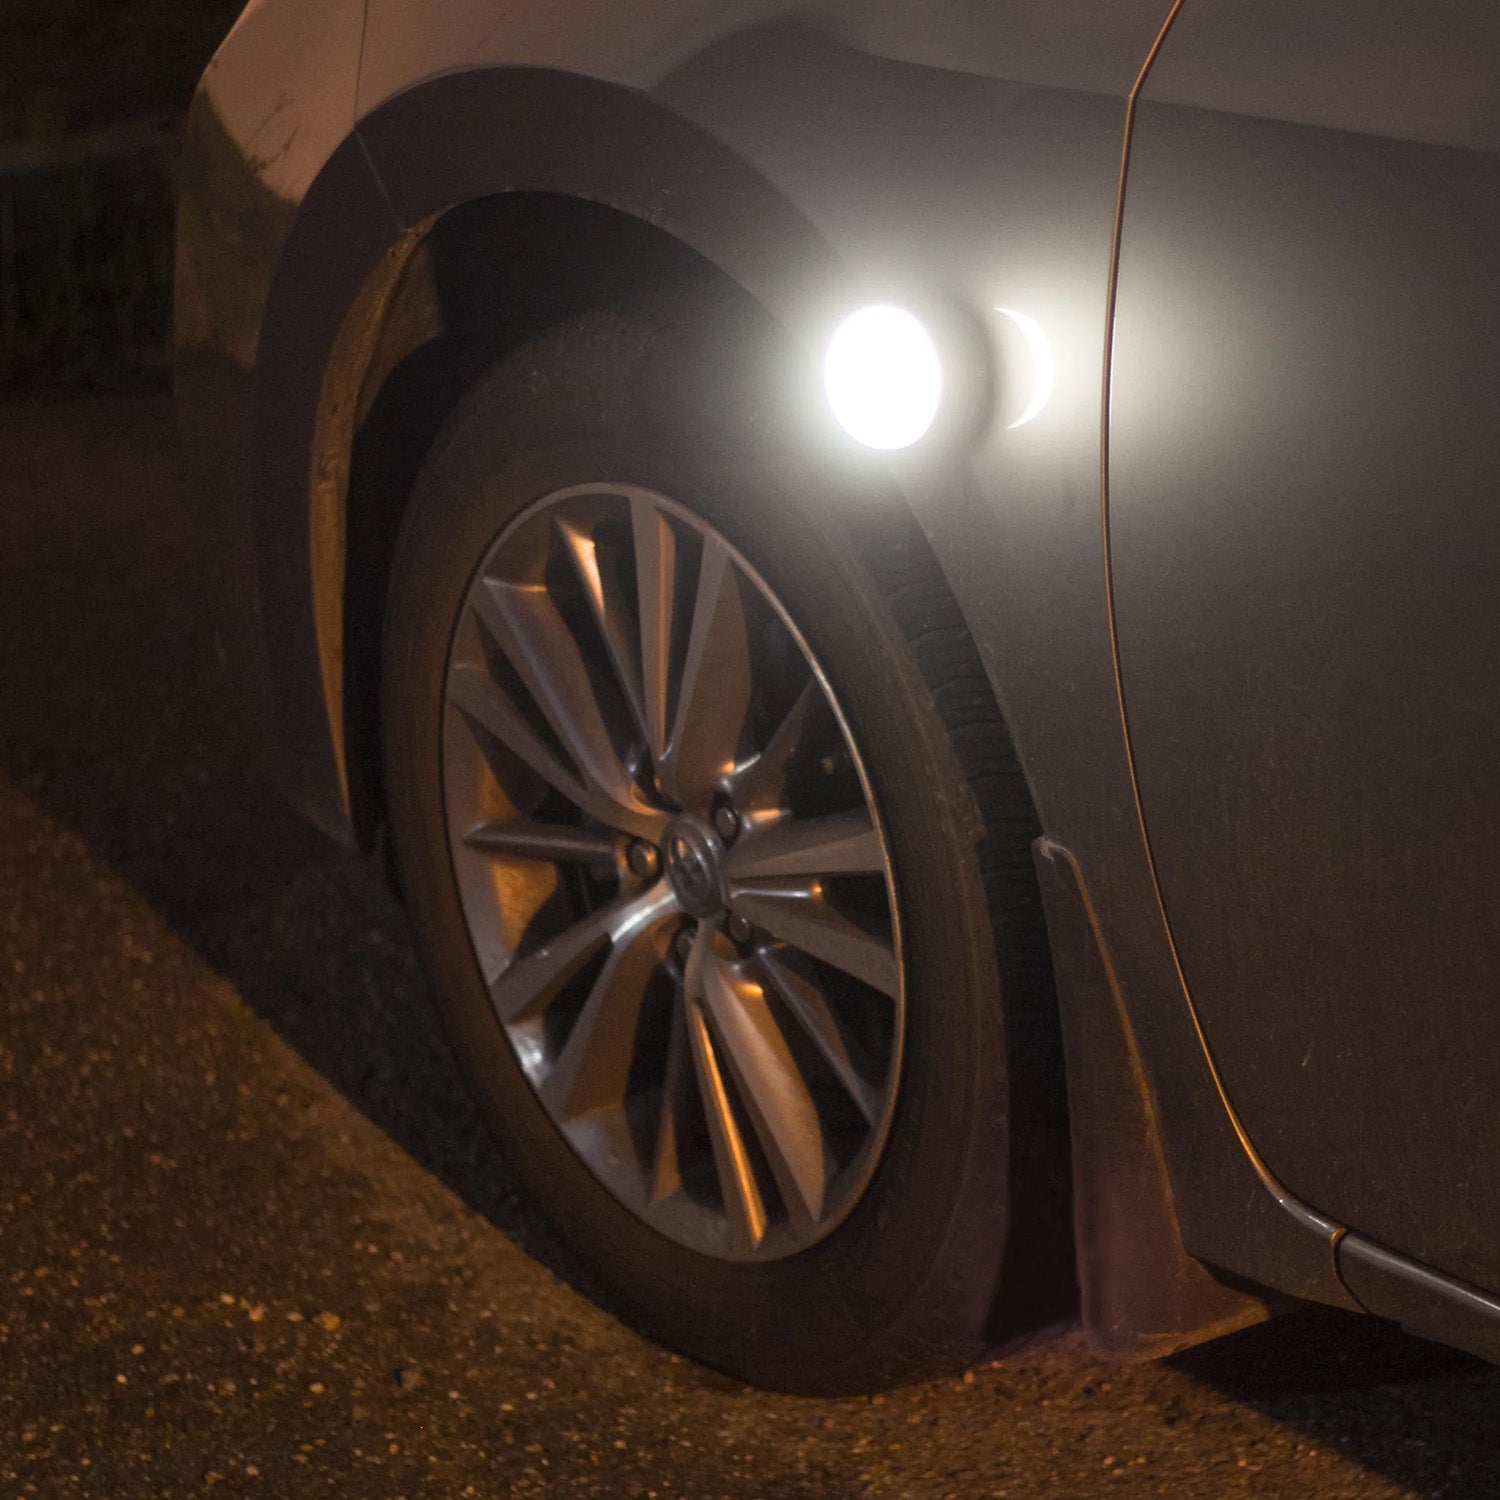 Wagan Brite-Nite Dome Lantern Lighting a Car Tire